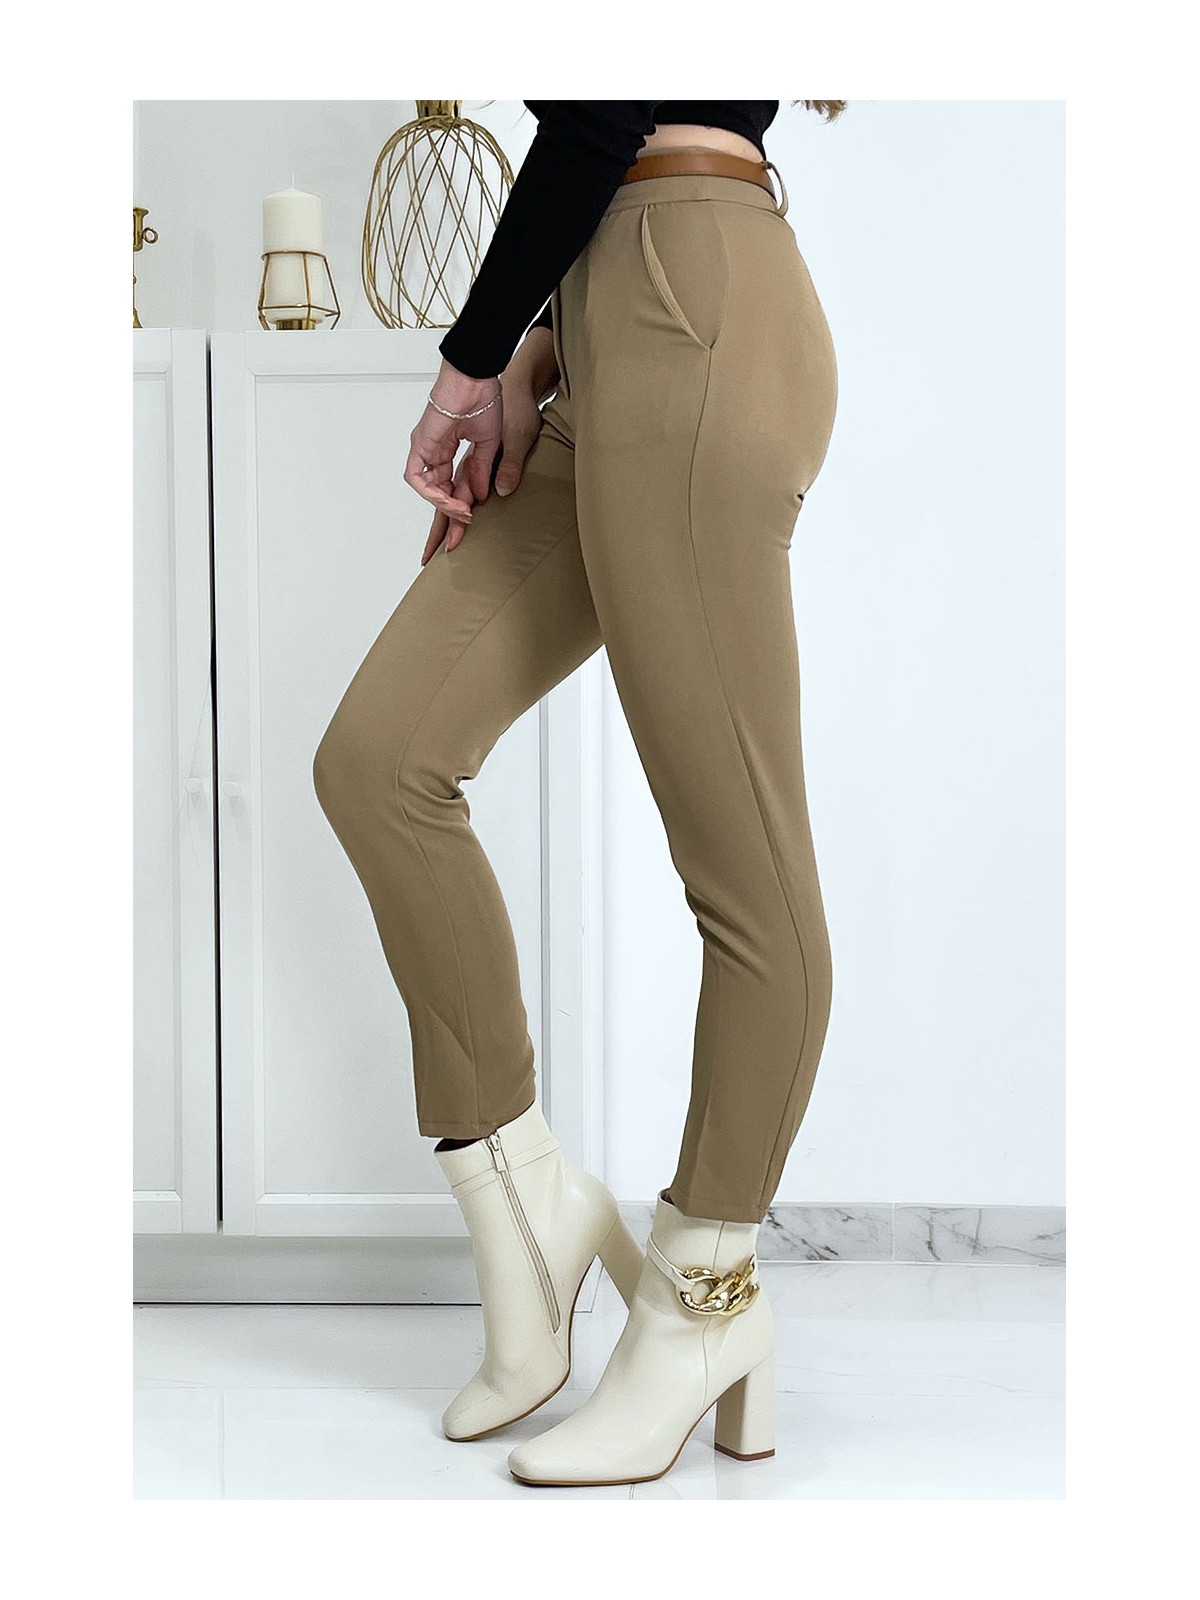 Pantalon working girl camel avec poches et ceinture - 4